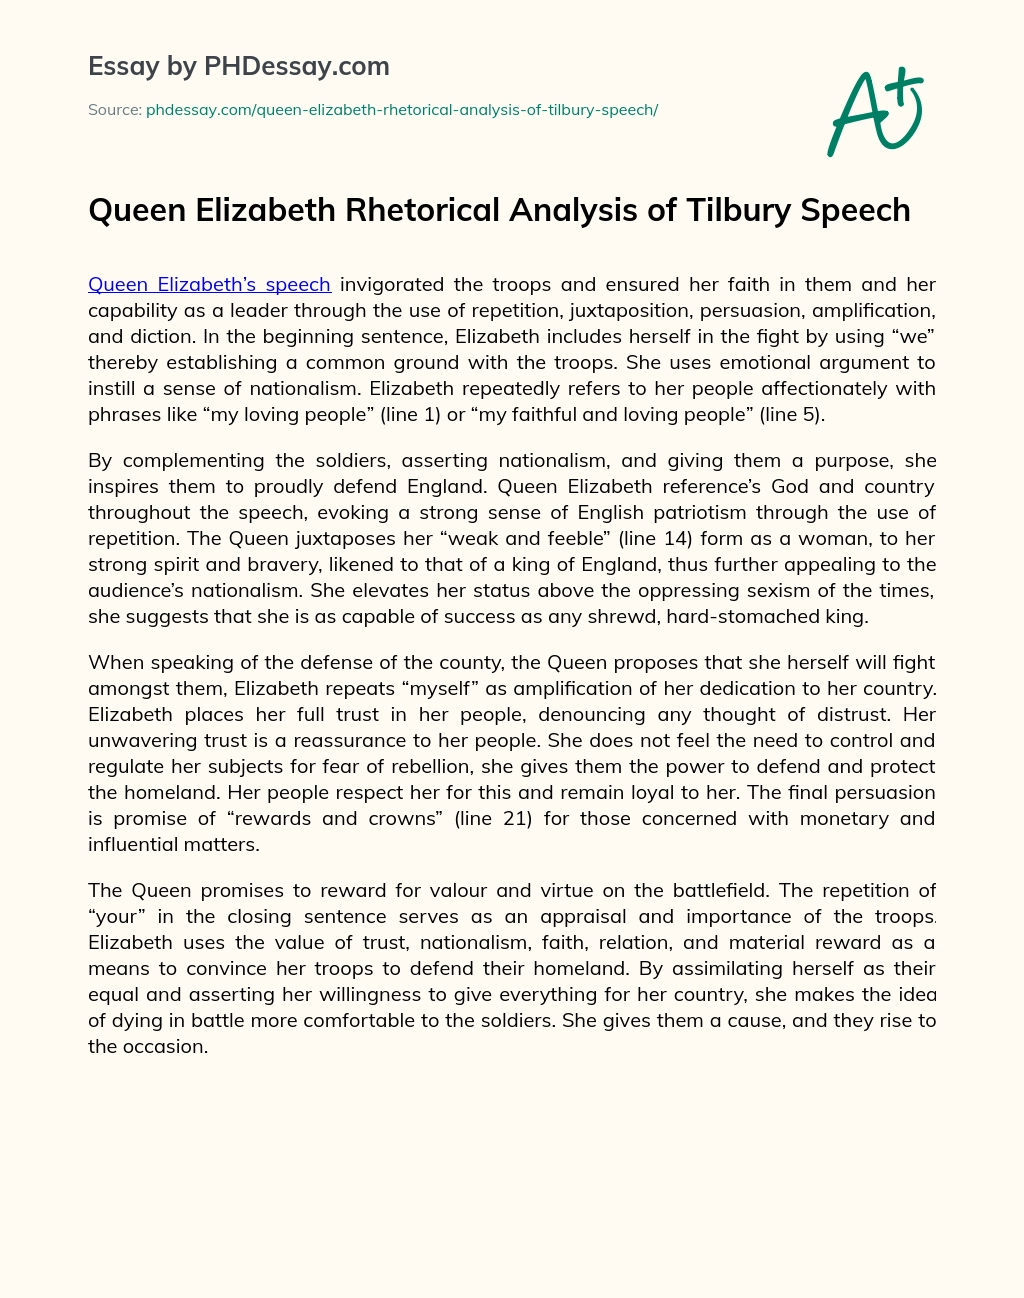 Queen Elizabeth Rhetorical Analysis of Tilbury Speech essay